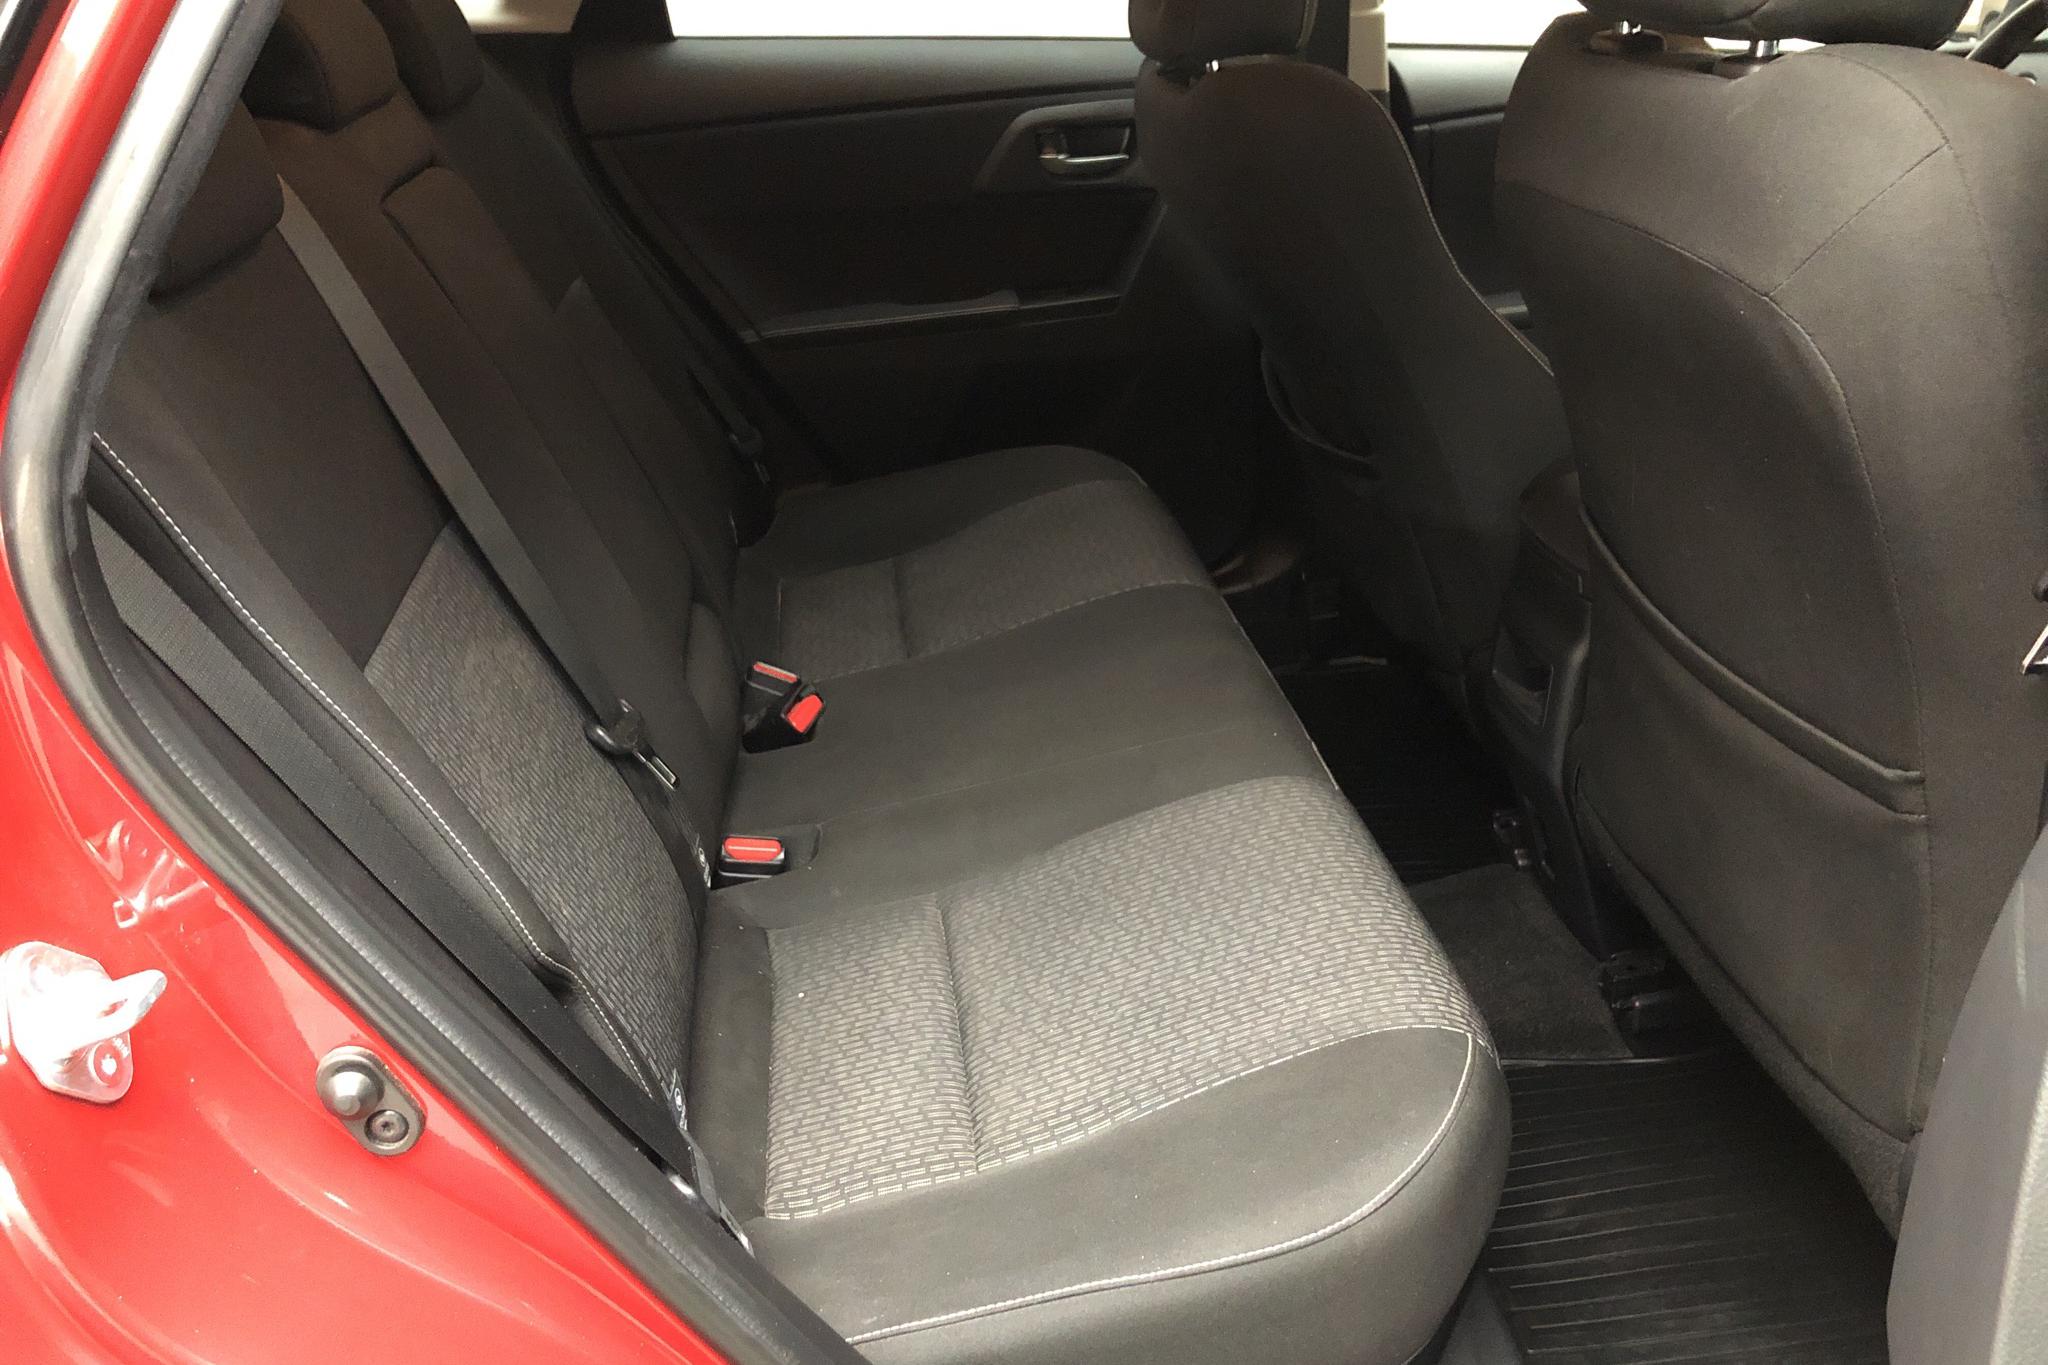 Toyota Auris 1.8 HSD 5dr (99hk) - 3 835 mil - Automat - Dark Red - 2015